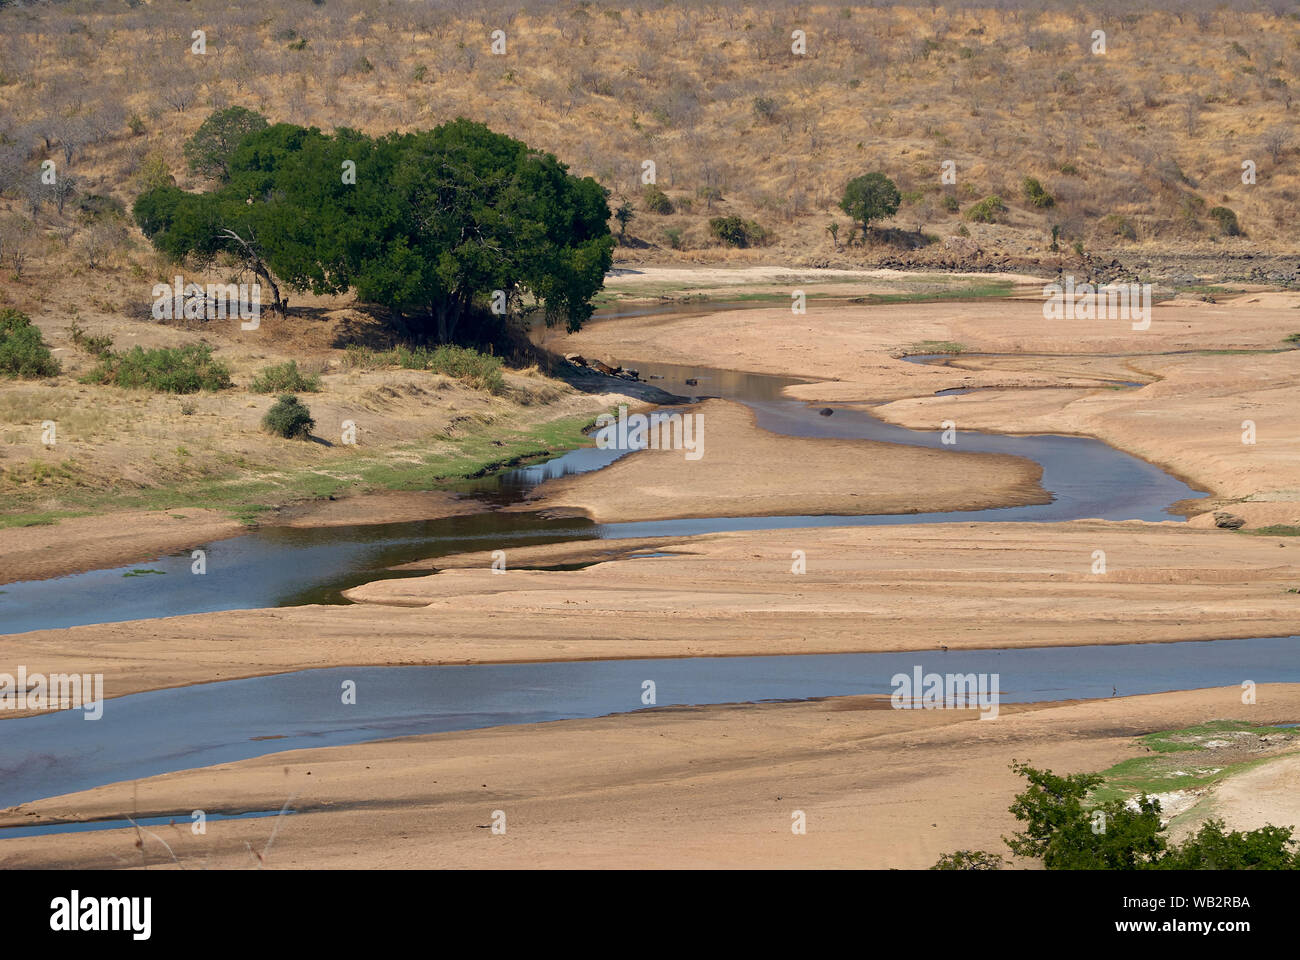 The Ruaha river at low water level, Tanzania Stock Photo